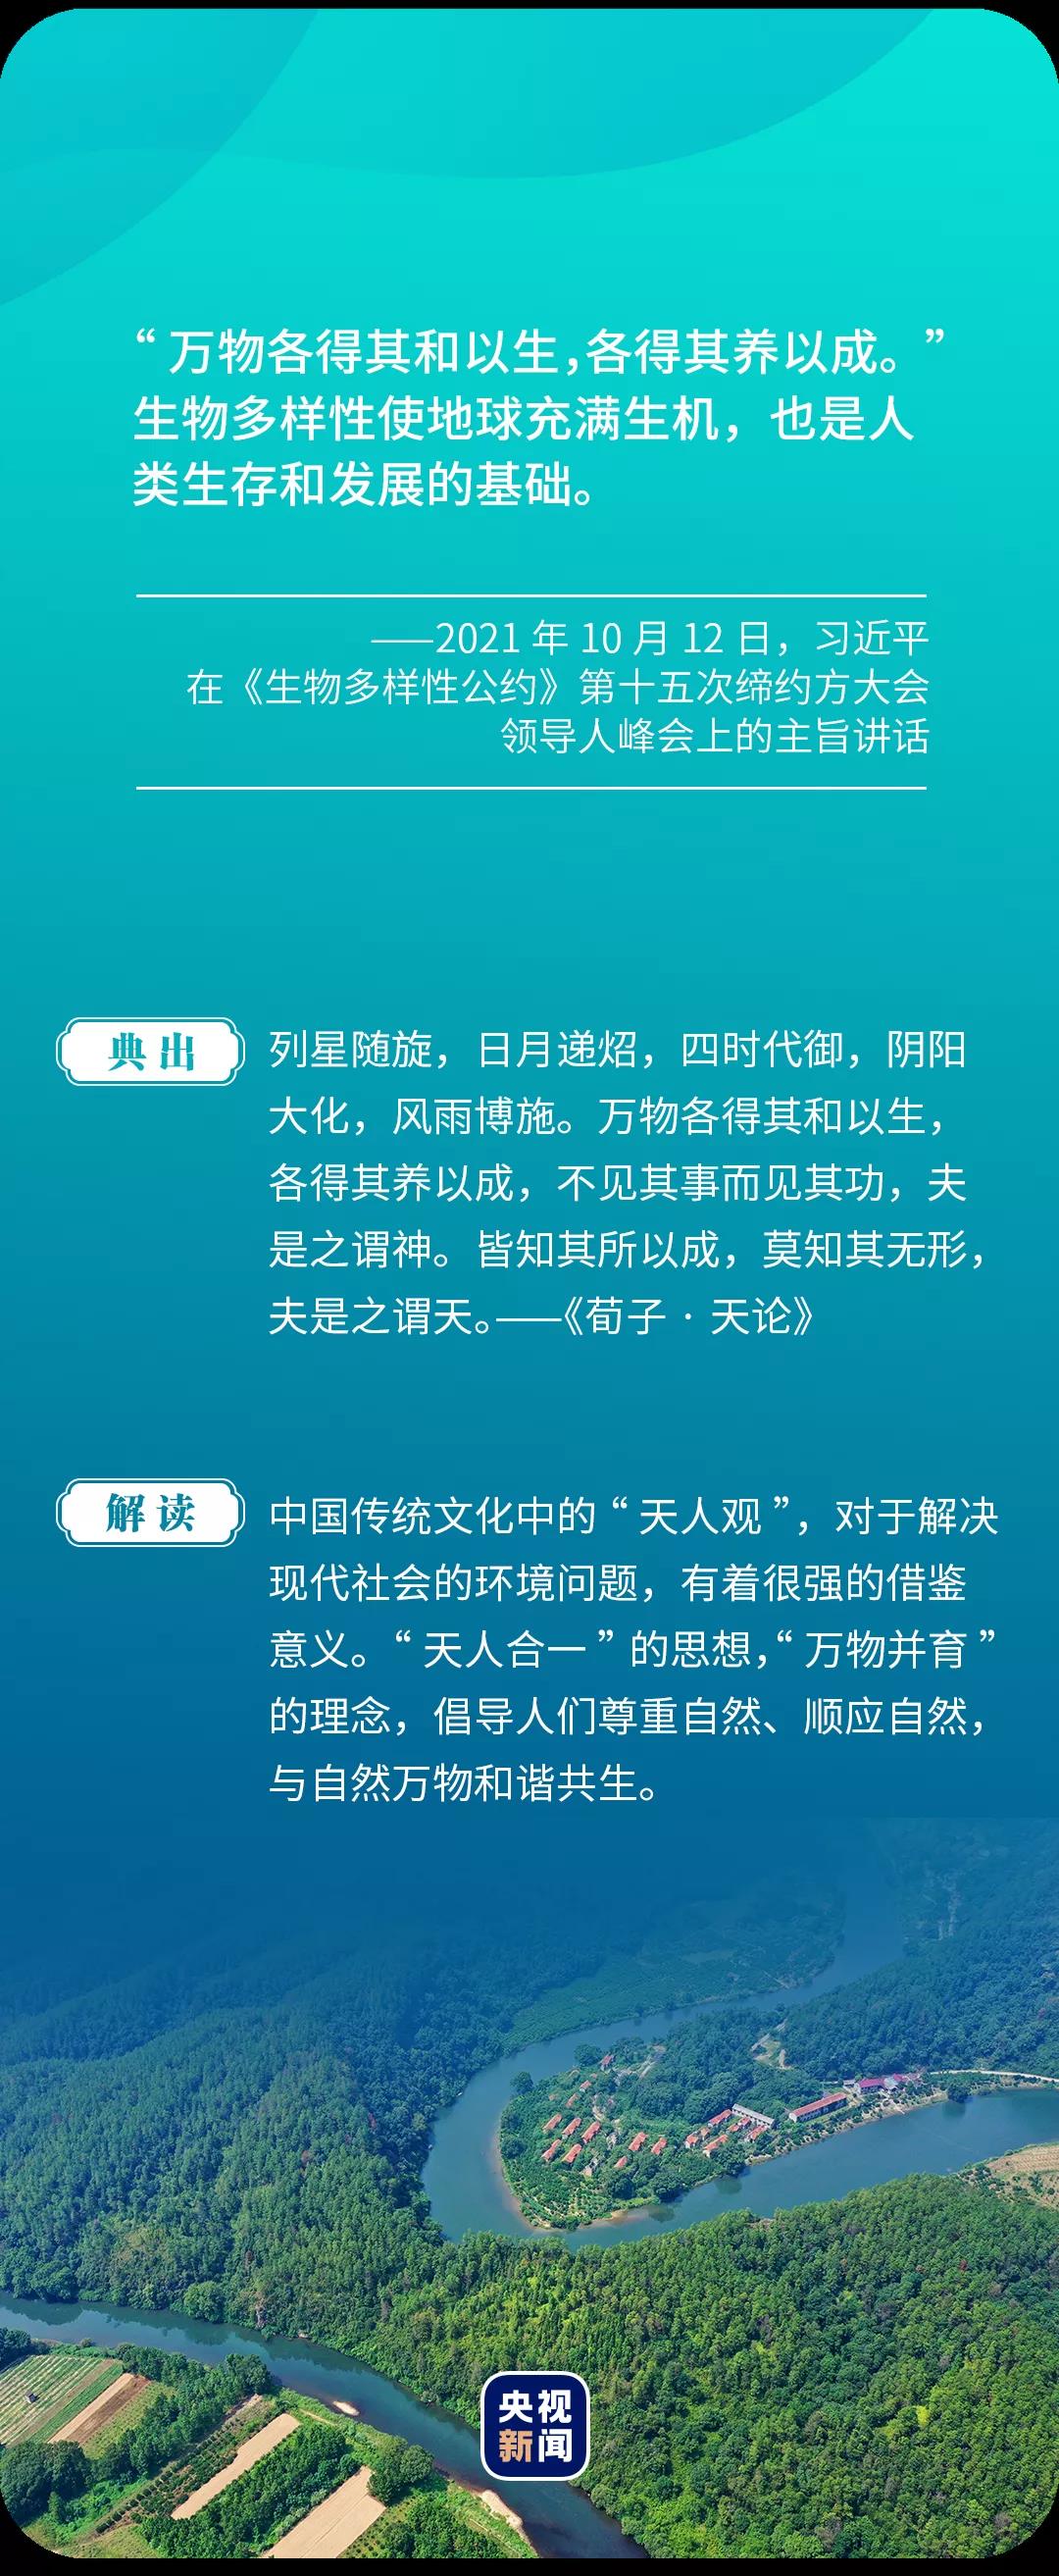 KK体育习语典读丨一句古语读懂中国生态文明理念(图1)